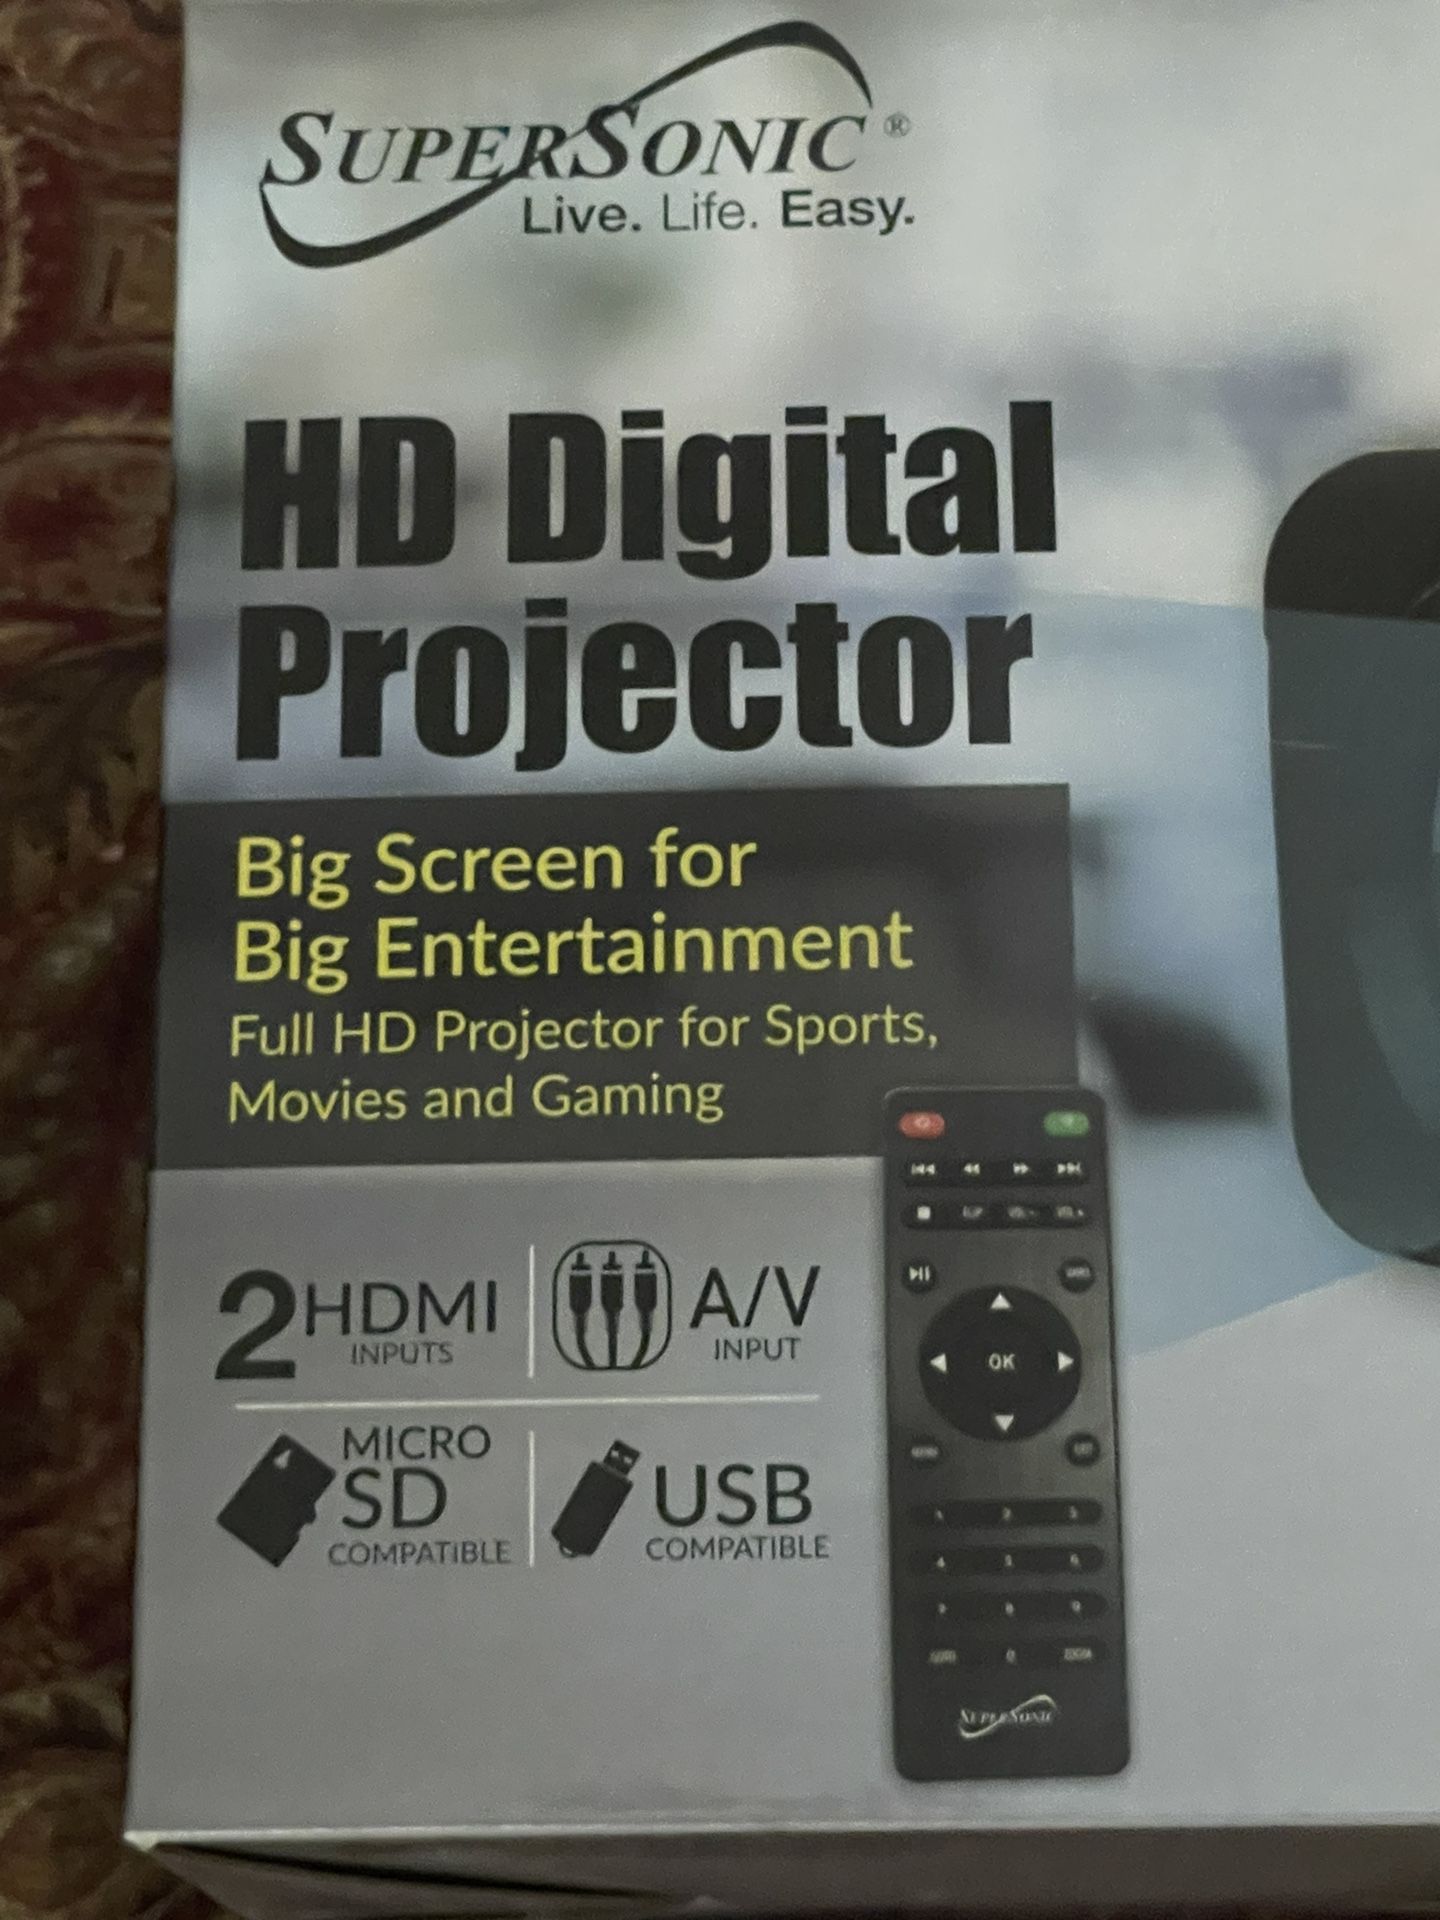 HD Digital Projector - New in box